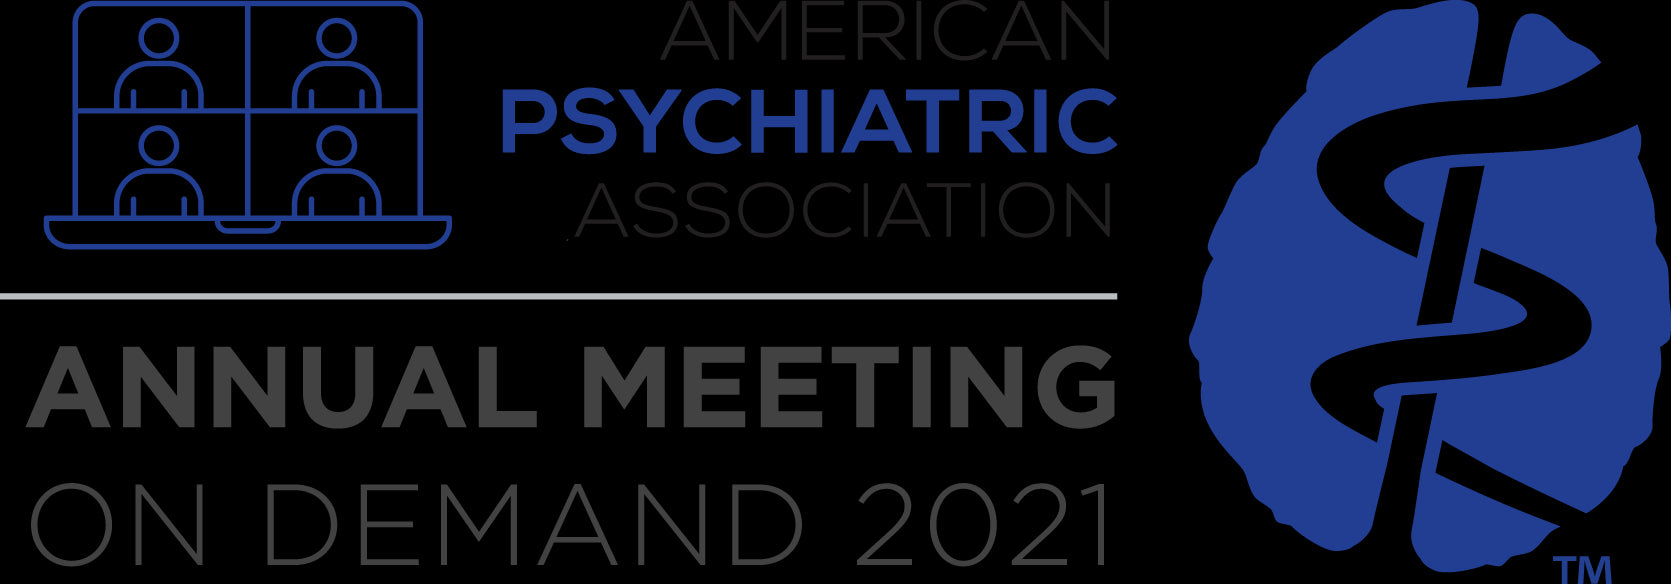 APA (American Psychiatric Association) Annual Meeting On Demand 2021